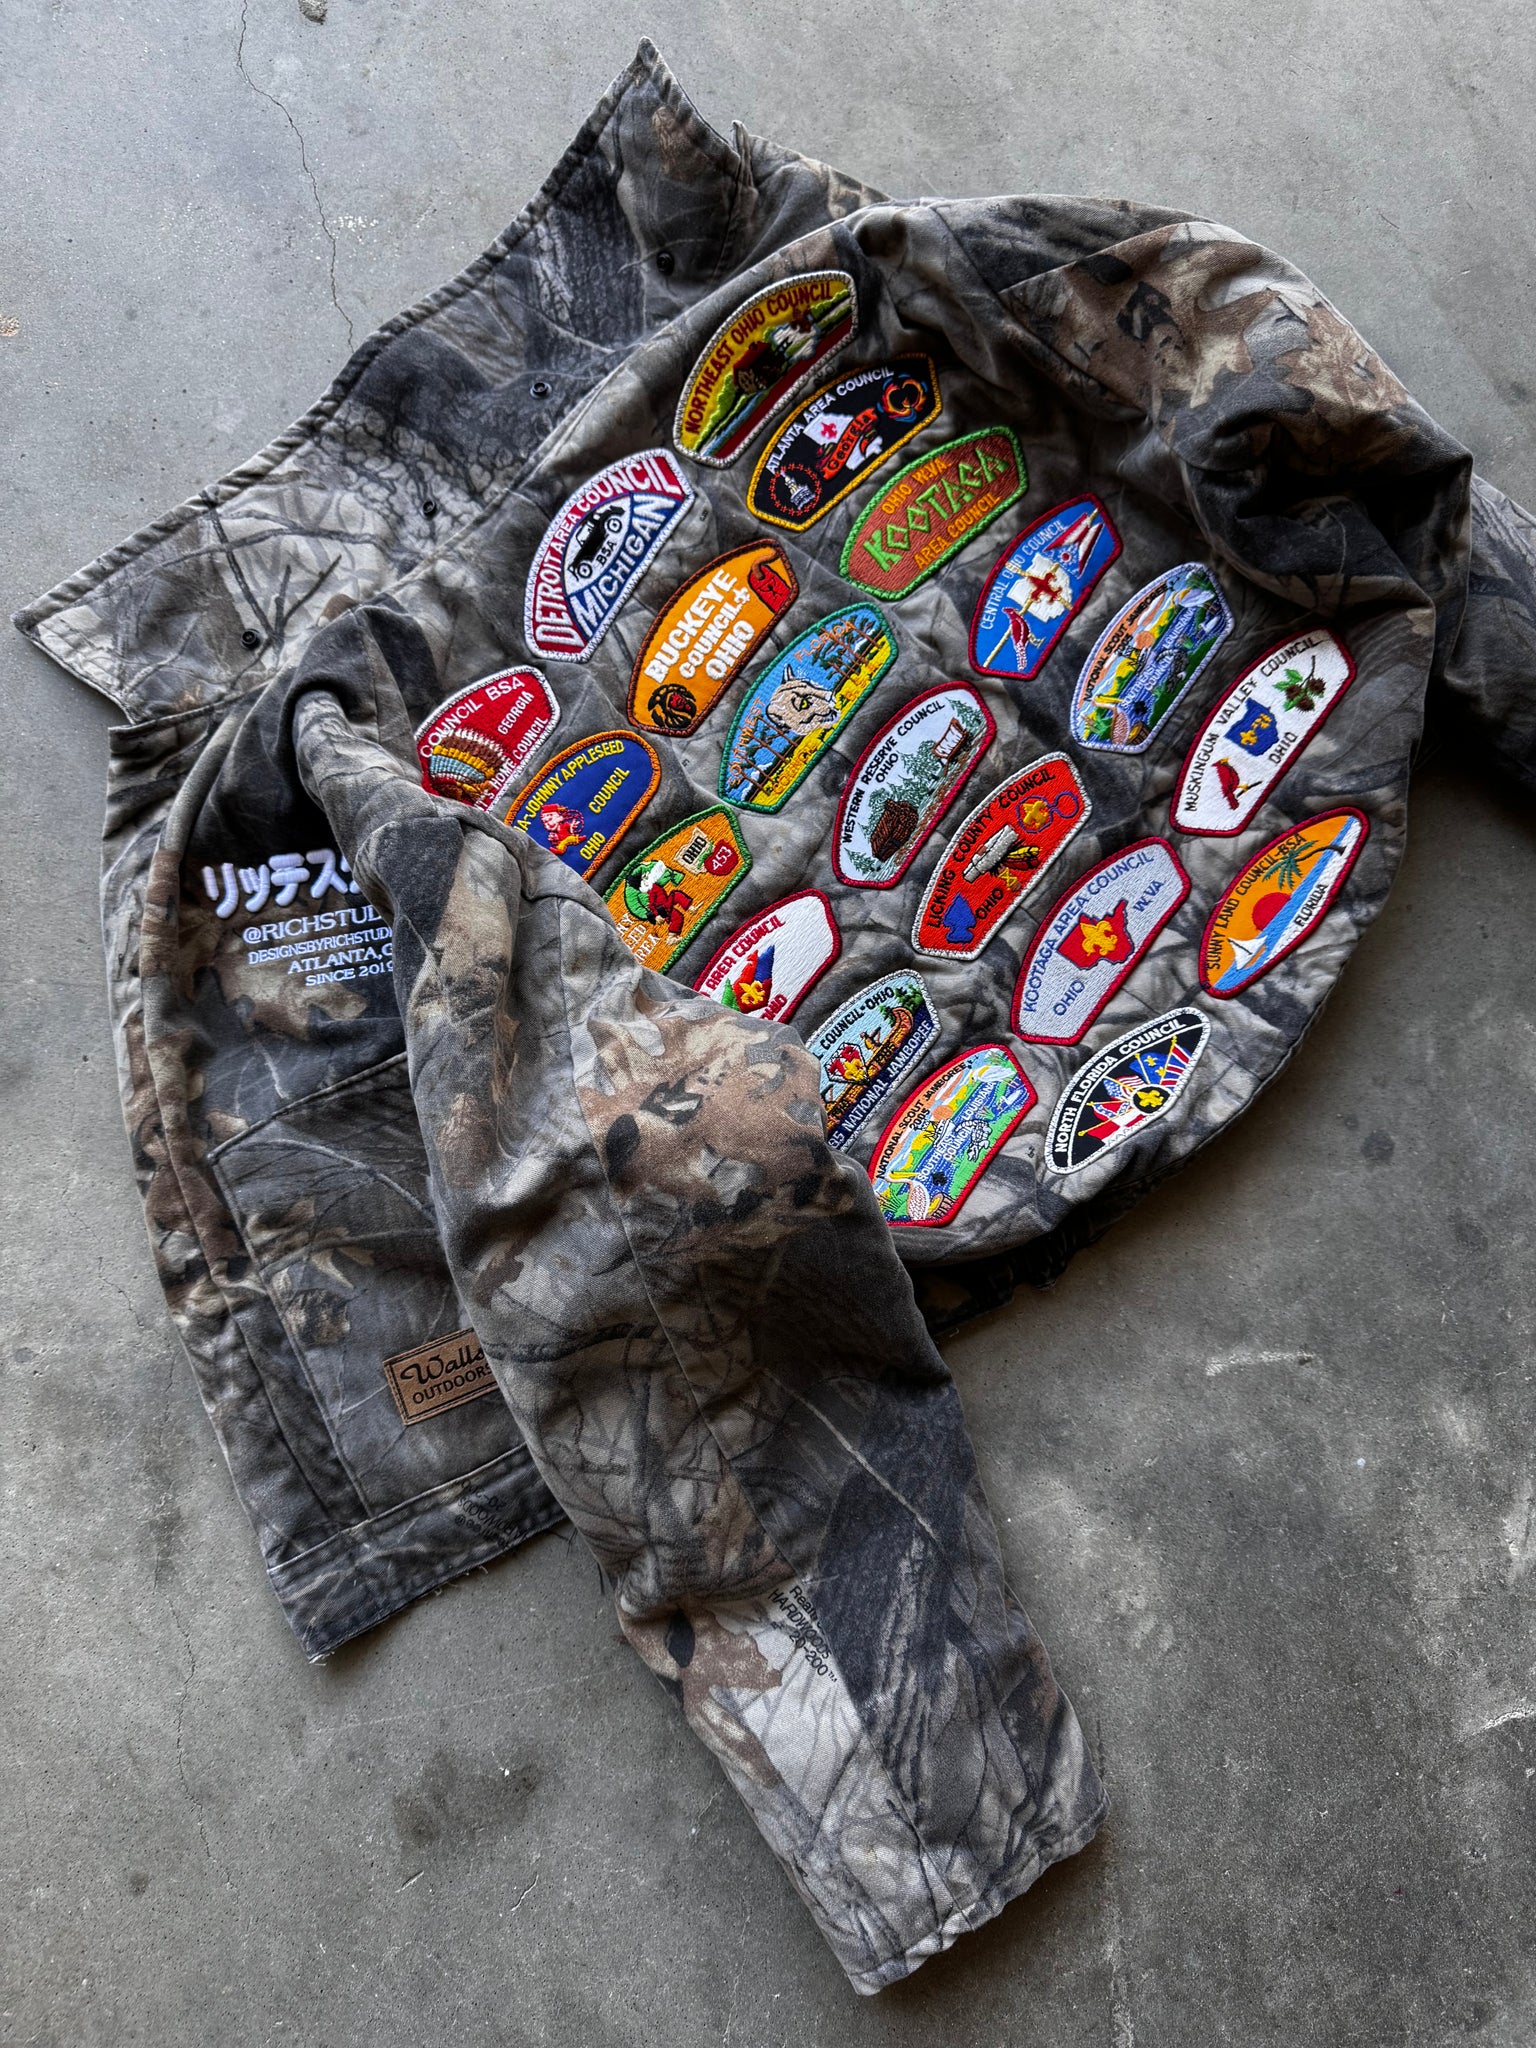 Vintage 70’s Reworked Scout Master Work Jacket (Medium) *Camo